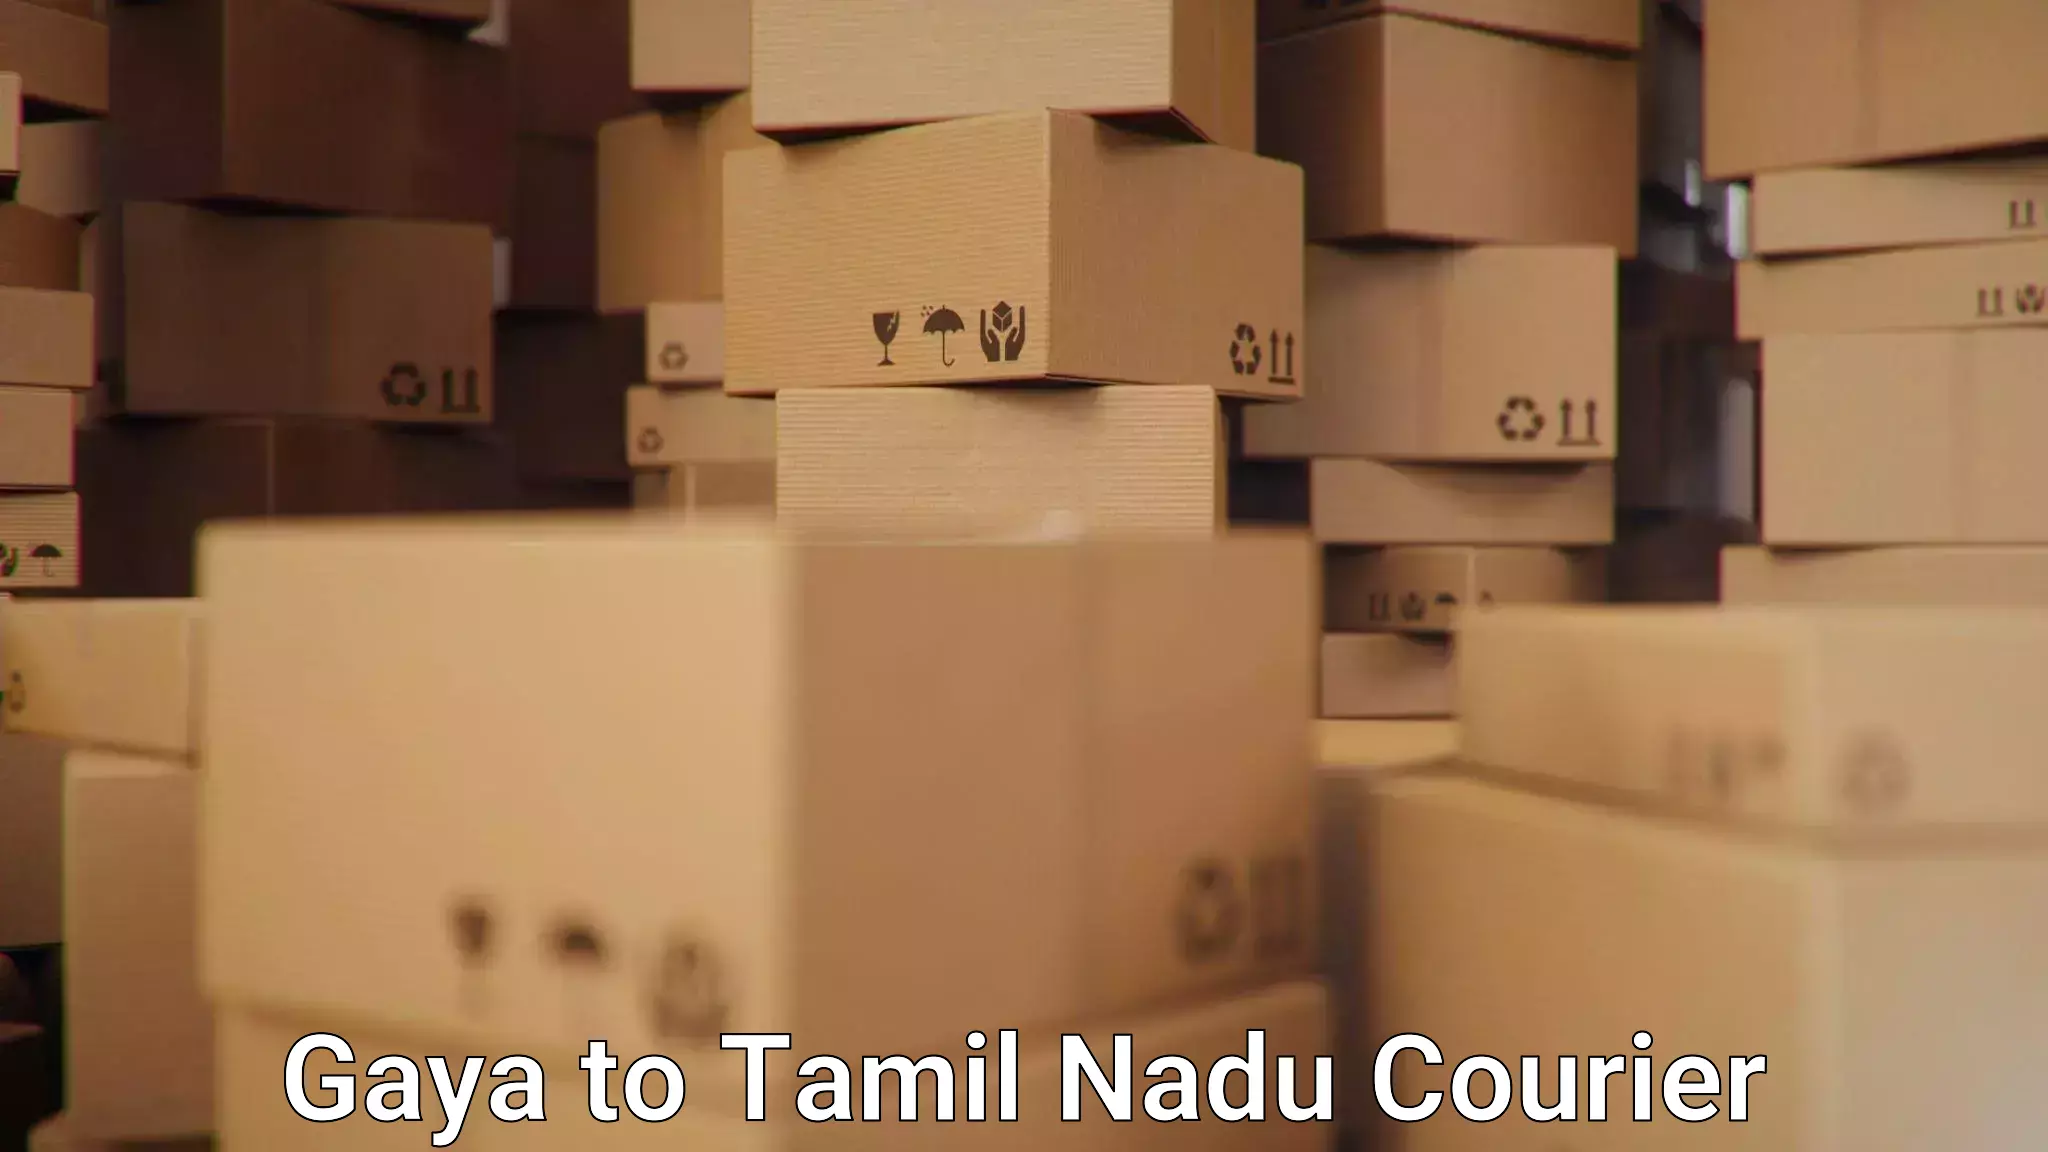 Advanced tracking systems Gaya to Tamil Nadu